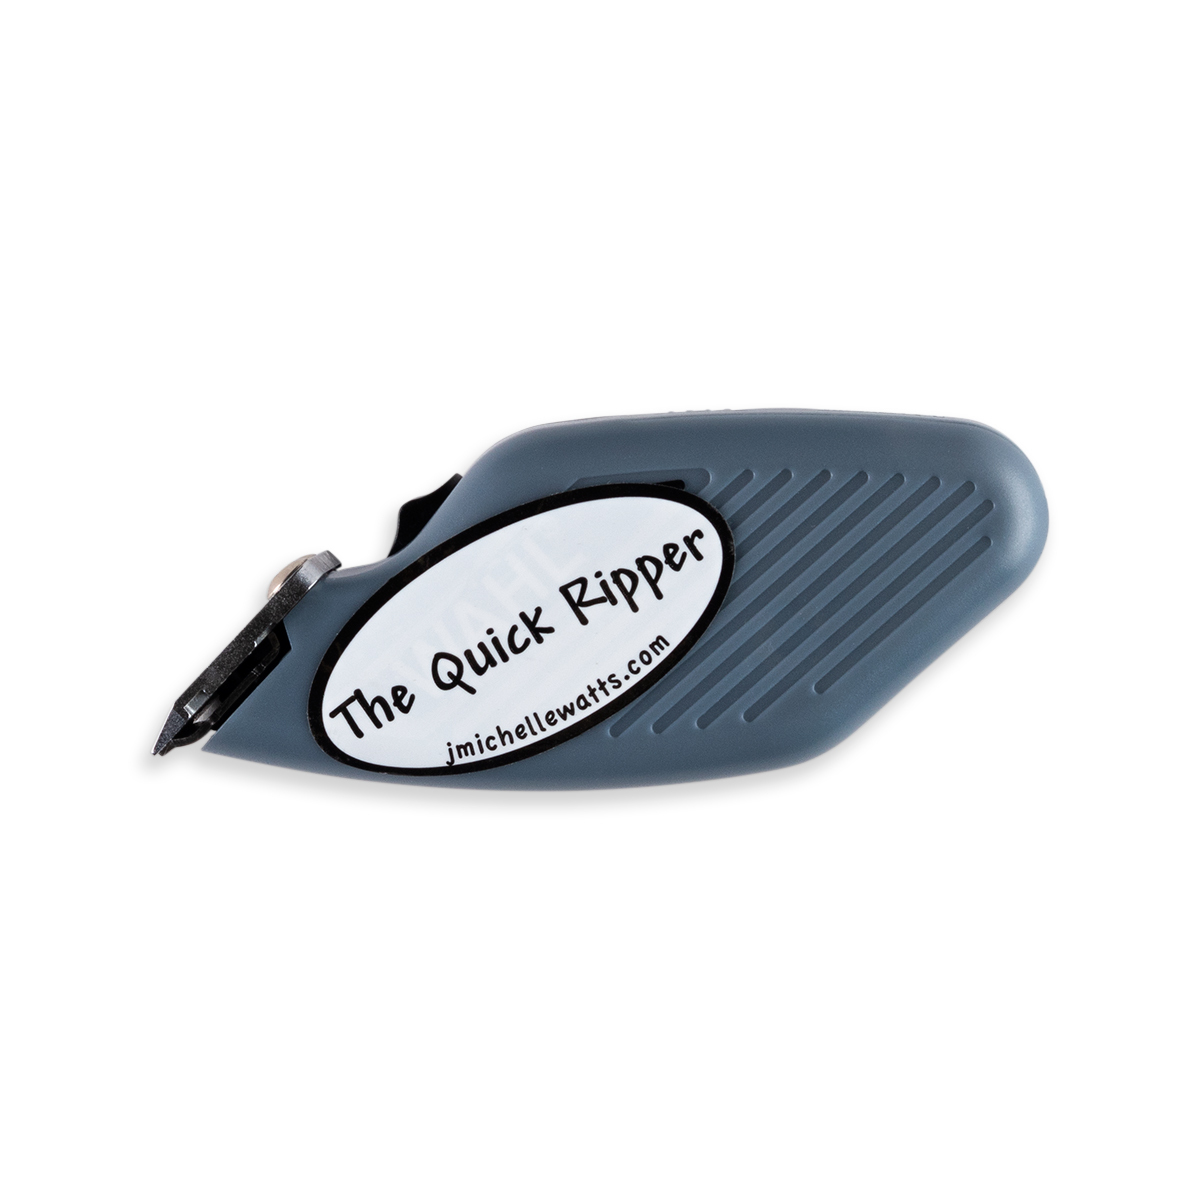 Clover Seam Ripper - Felt Paper Scissors